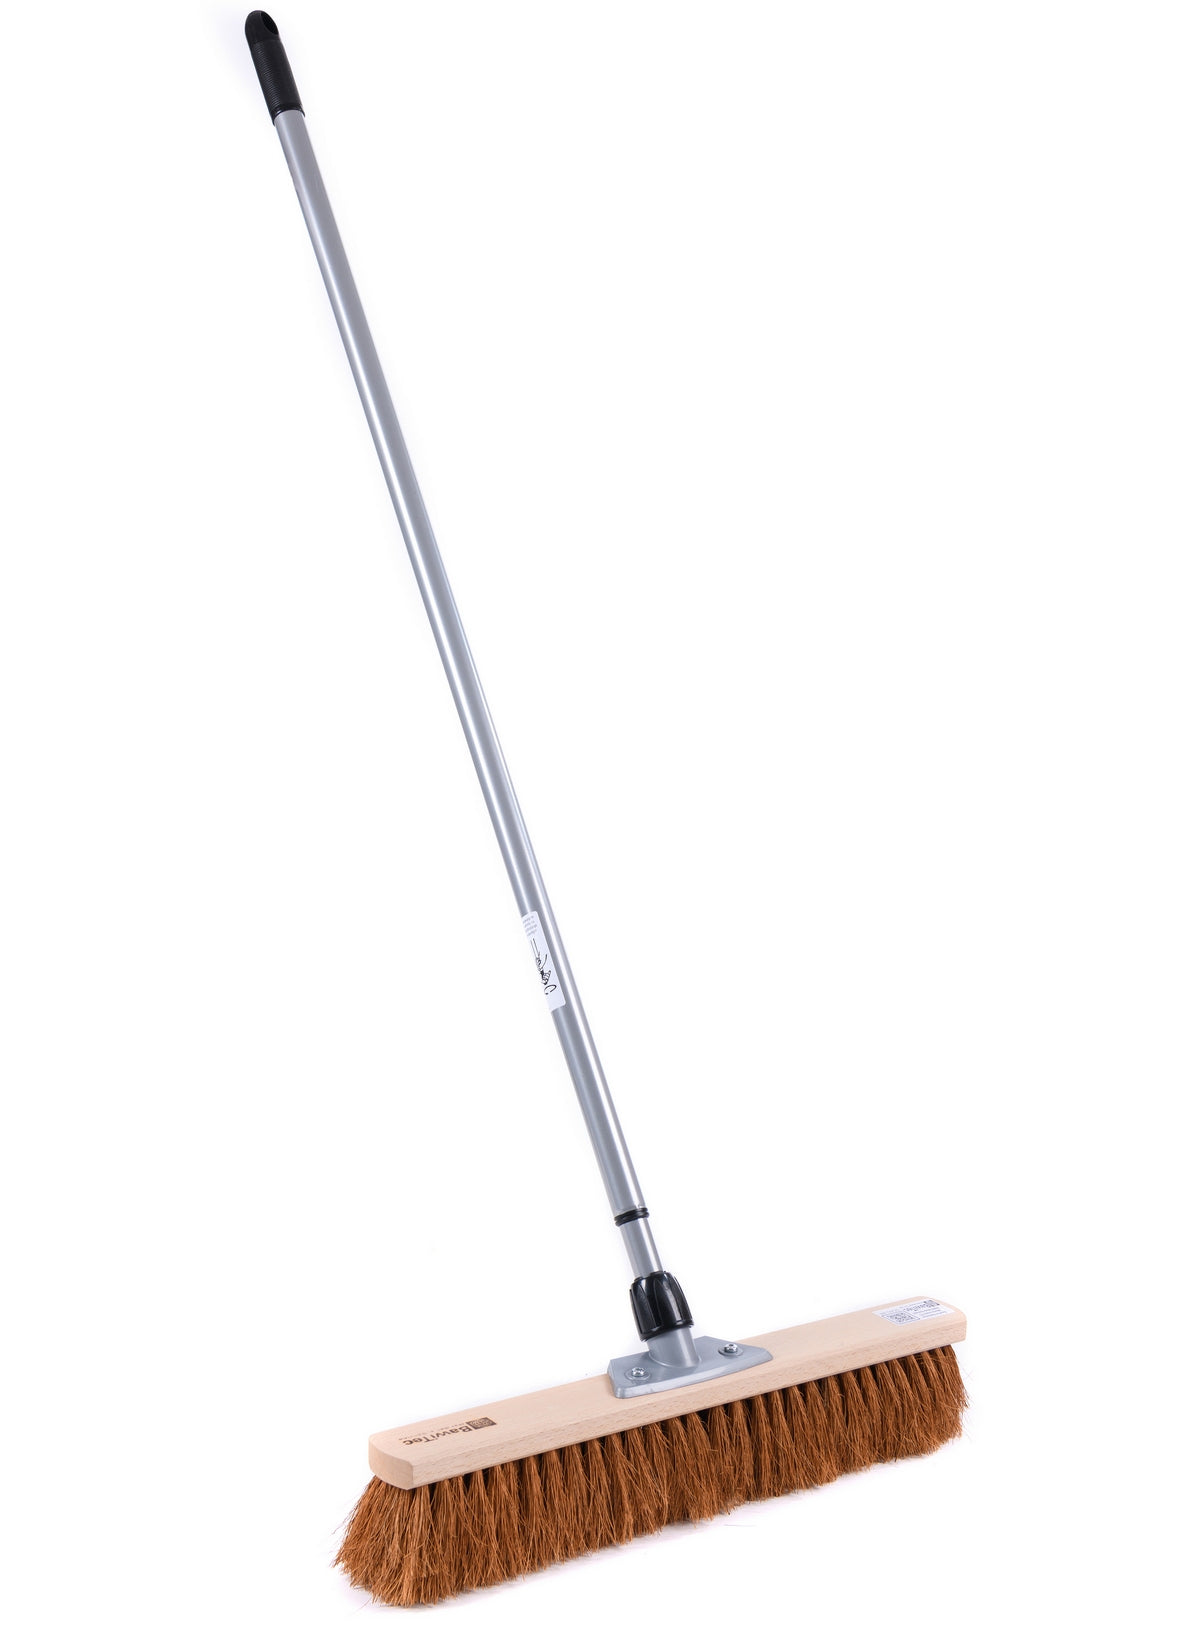 Hall broom coconut broom with telescopic handle, infinitely adjustable sweeping broom plant fiber coconut bristles